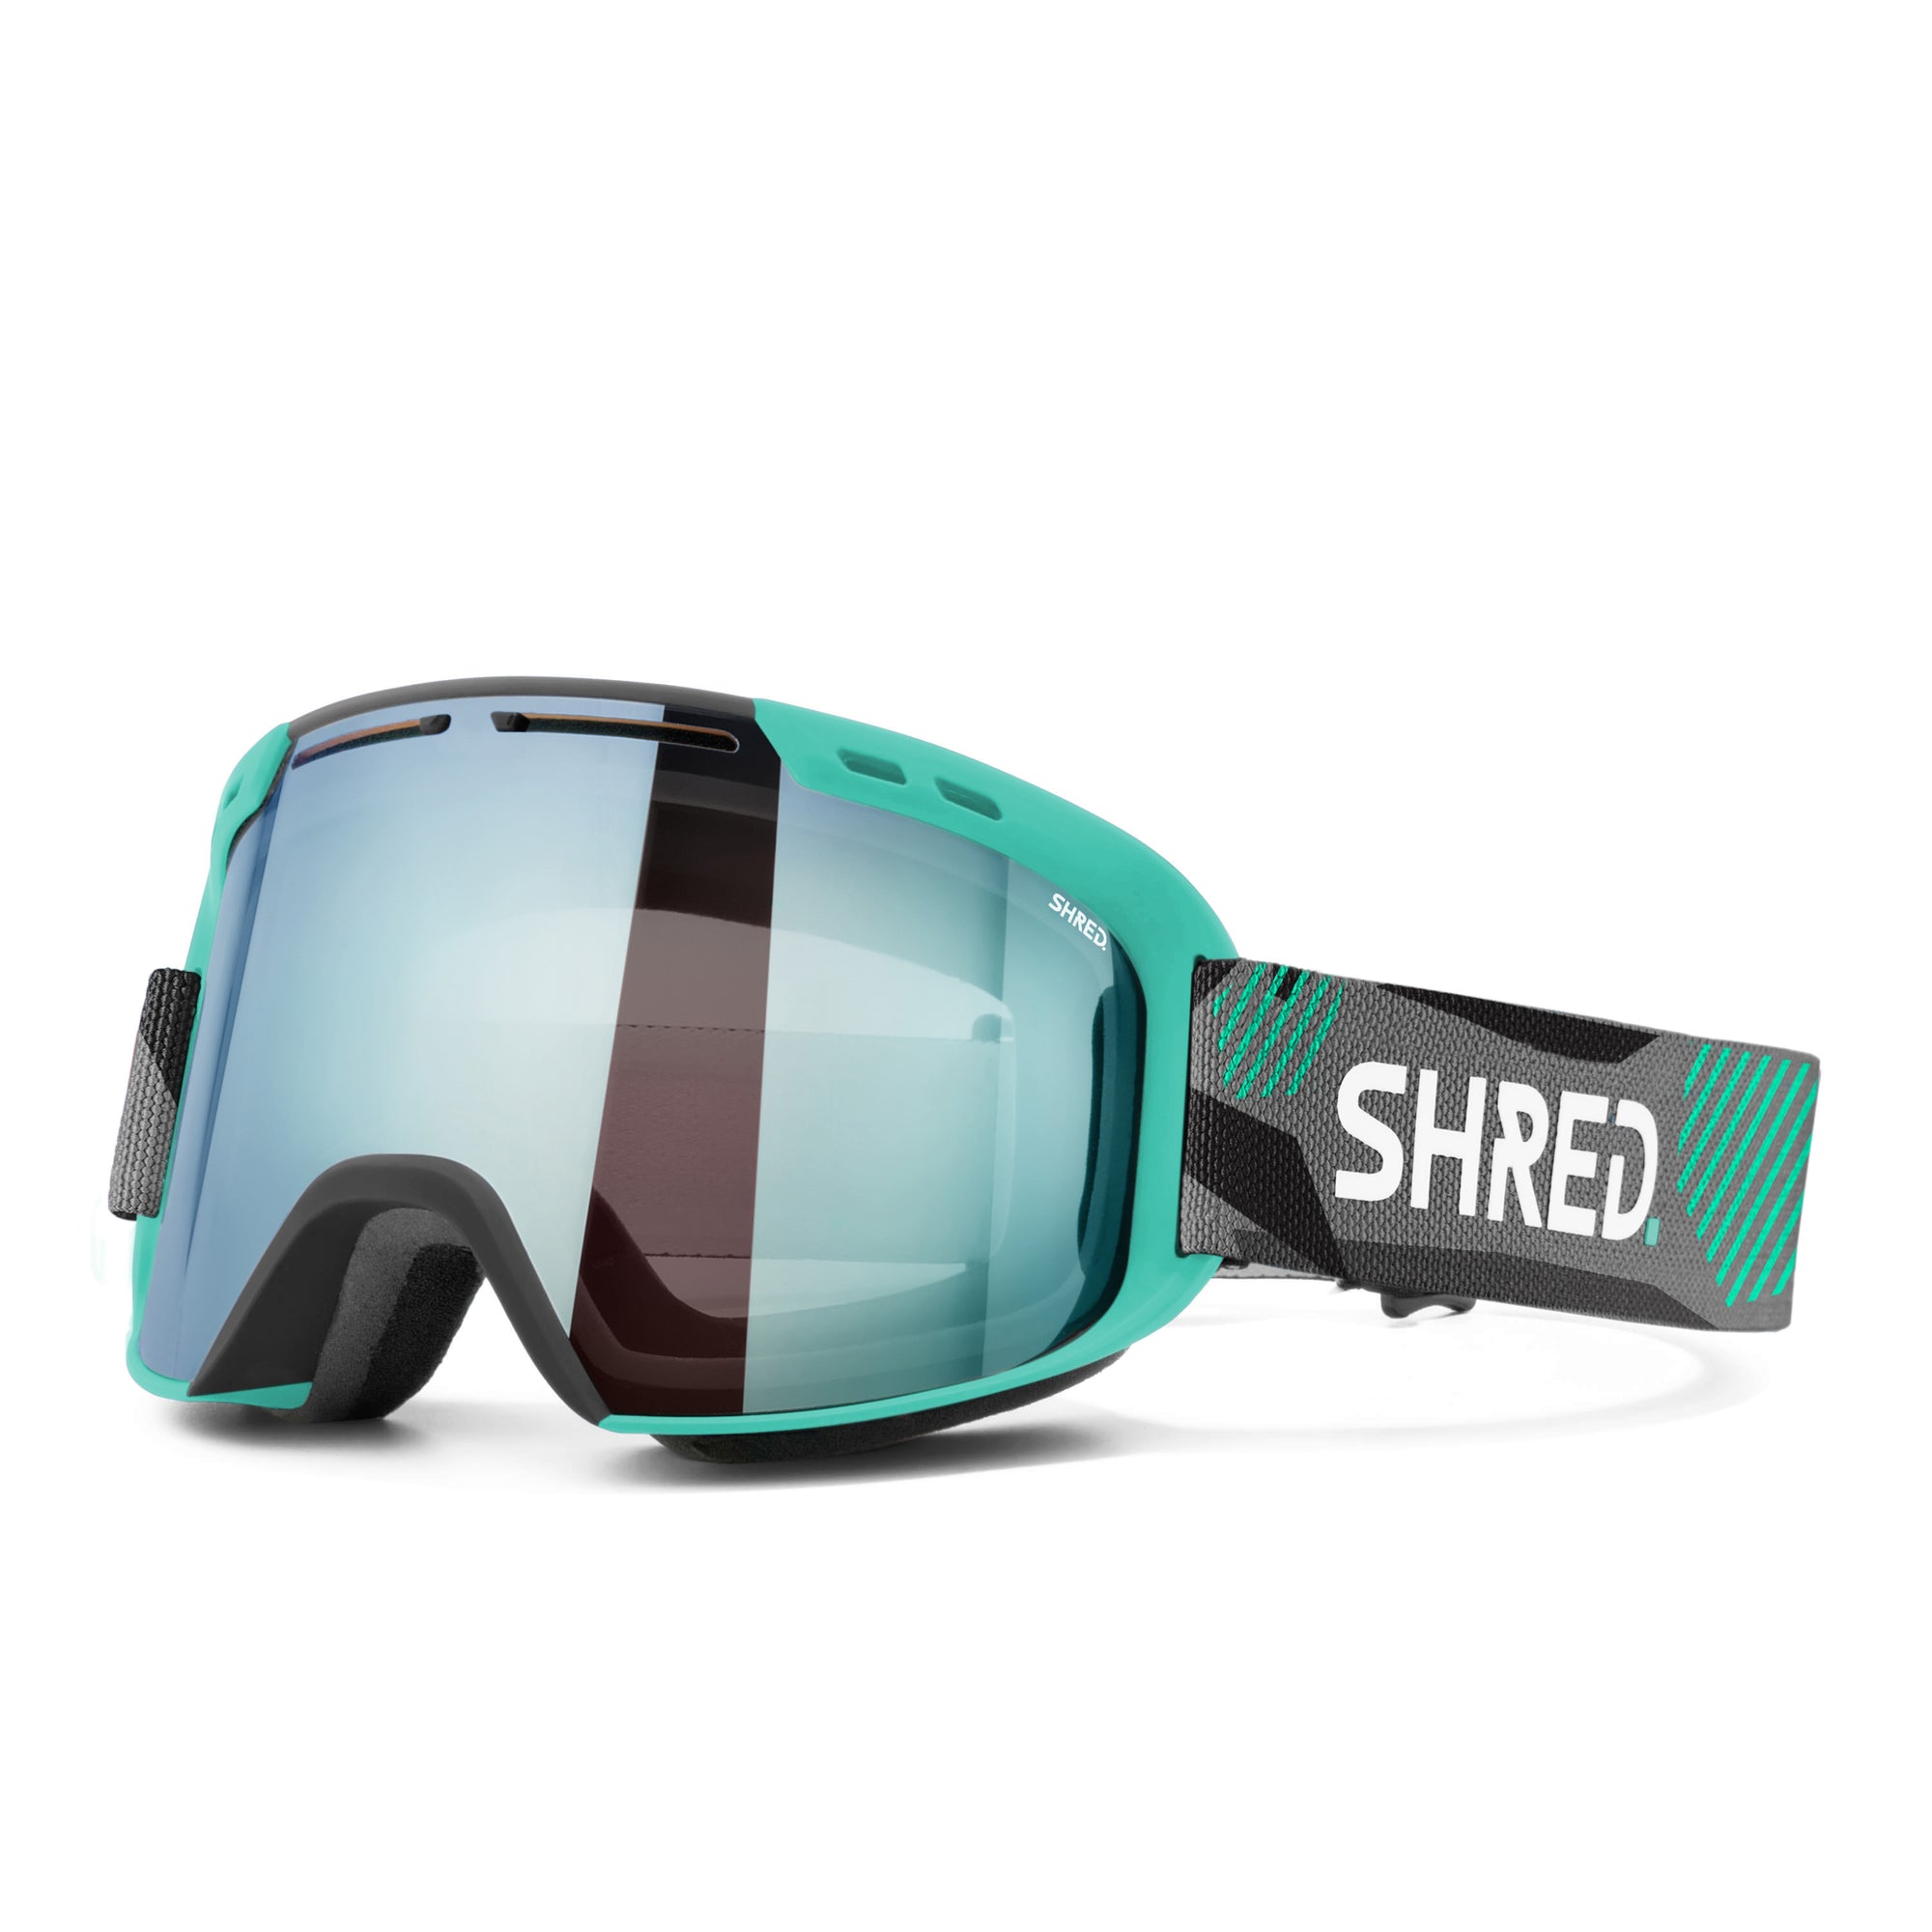 Amazify - Ski Goggles|GOAMAM11C